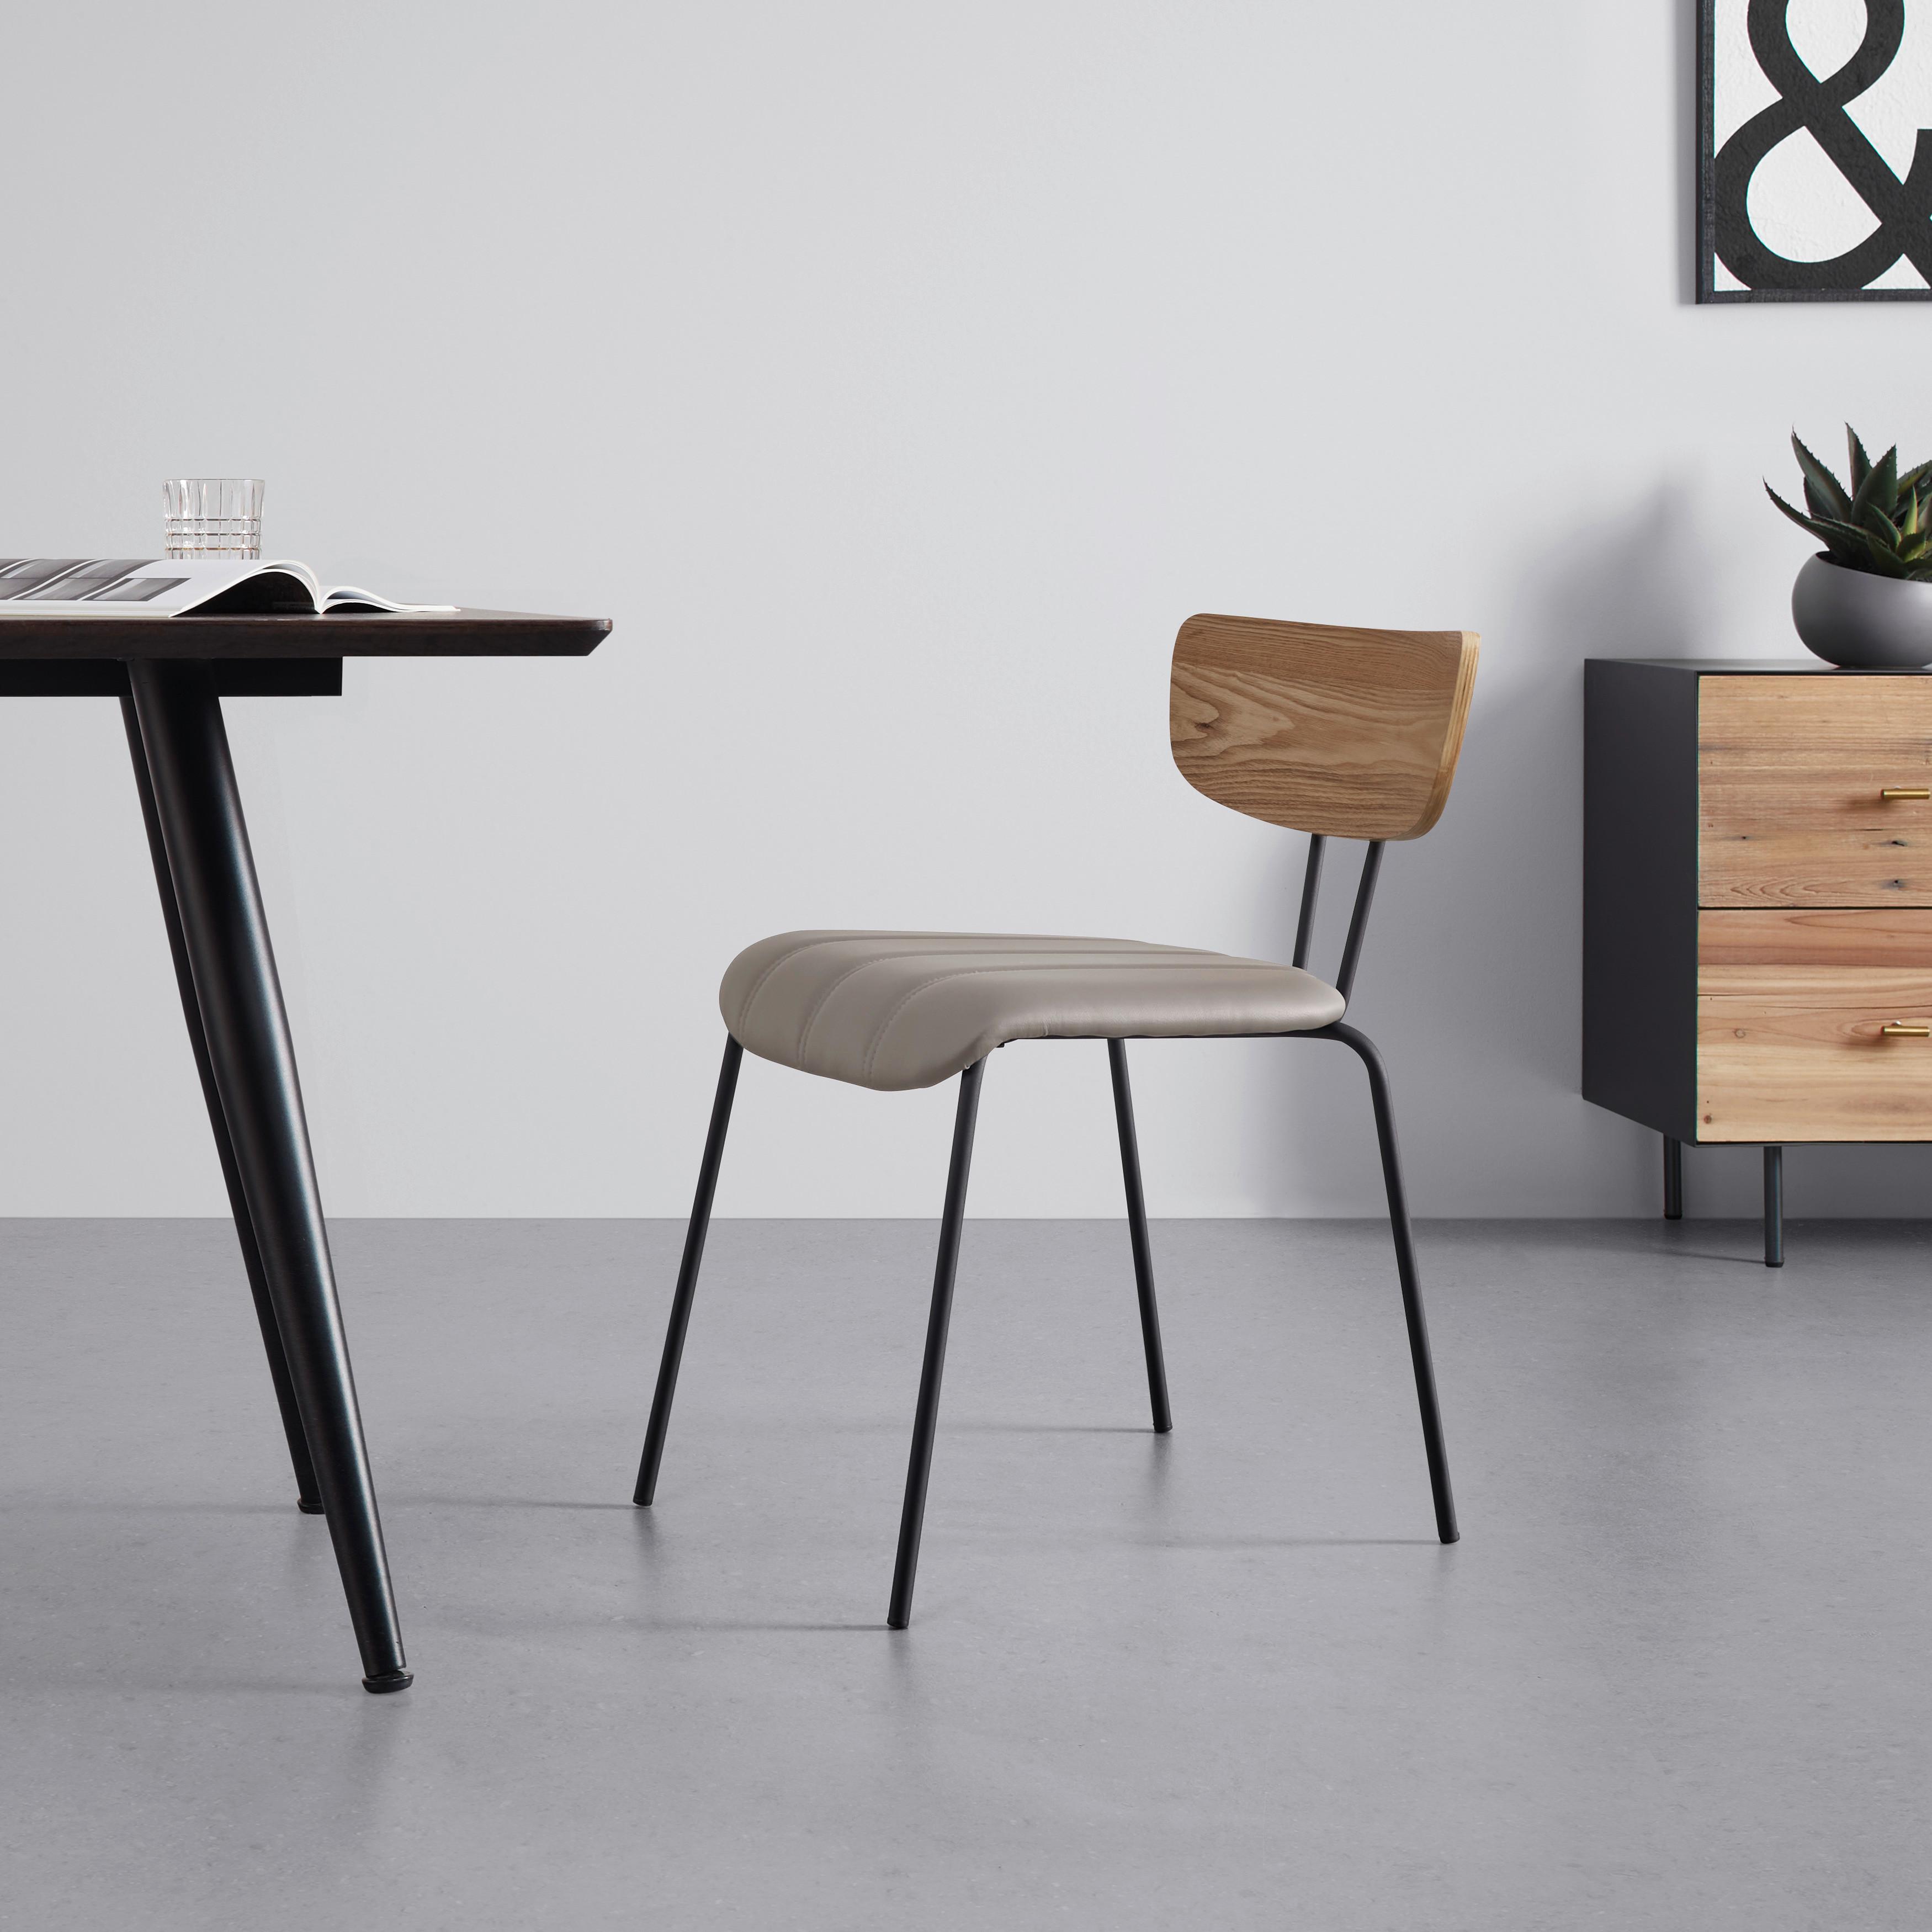 Stuhl "Cera", Lederlook, taupe, Gepolstert - Taupe/Schwarz, MODERN, Holz/Textil (42/78/54cm) - Bessagi Home